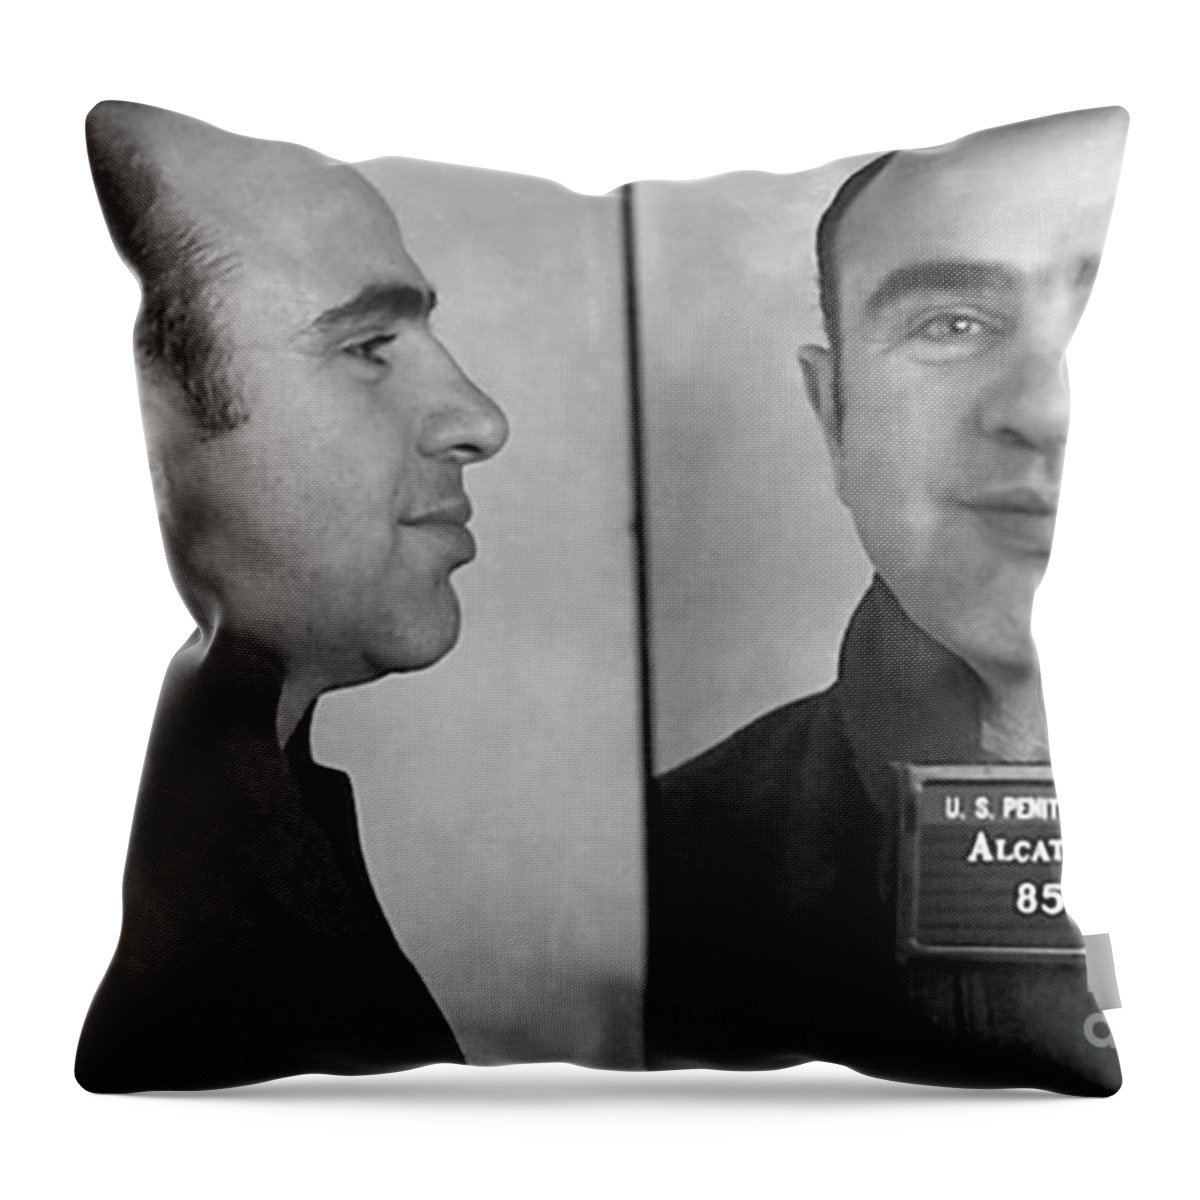 Prohibition Throw Pillow featuring the photograph Al Capone Alcatraz Mugshot by Jon Neidert